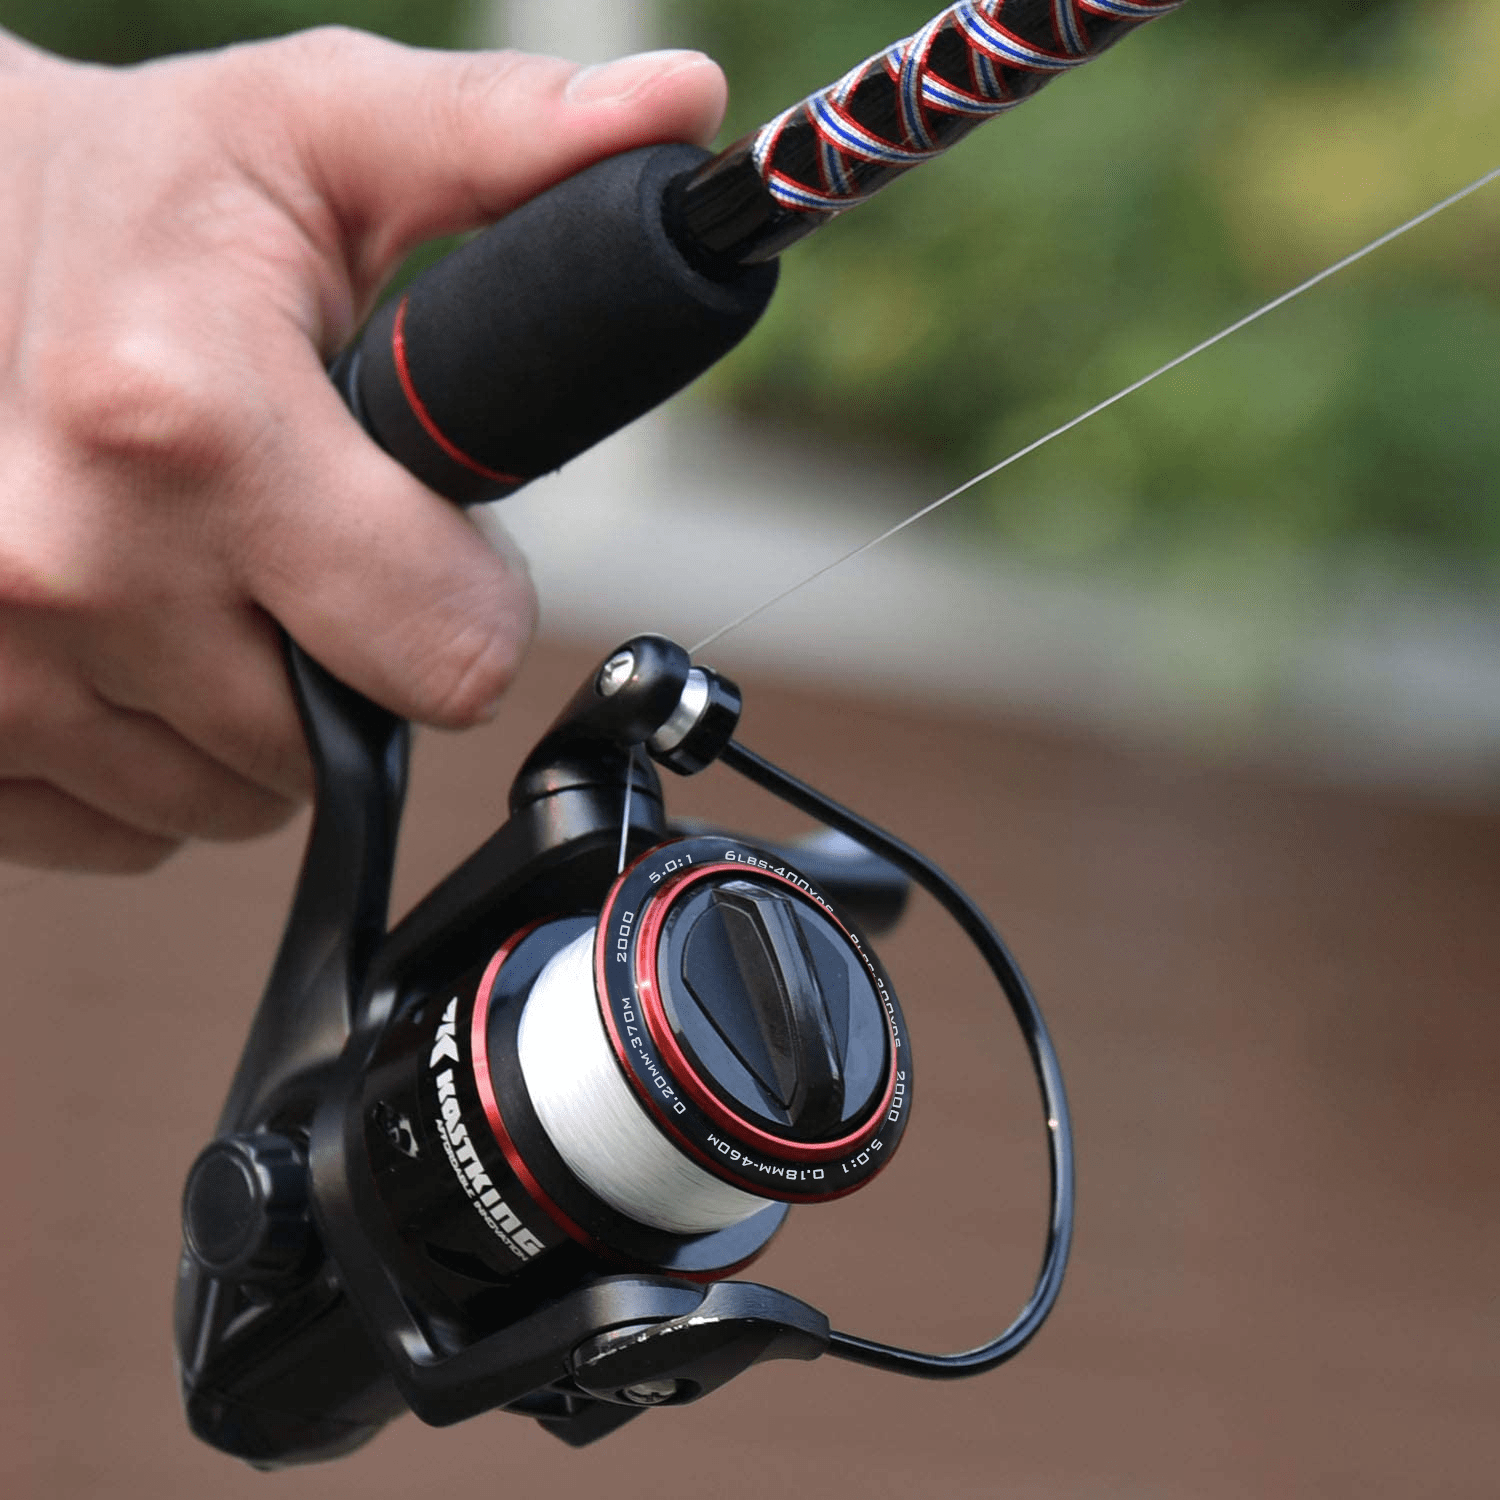 KastKing Brutus Spinning Reel, Freshwater Spinning Fishing Reels, Graphite Frame, CNC Aluminum Spool, 5.0:1 Gear Ratio, 4+1 Ball Bearings.